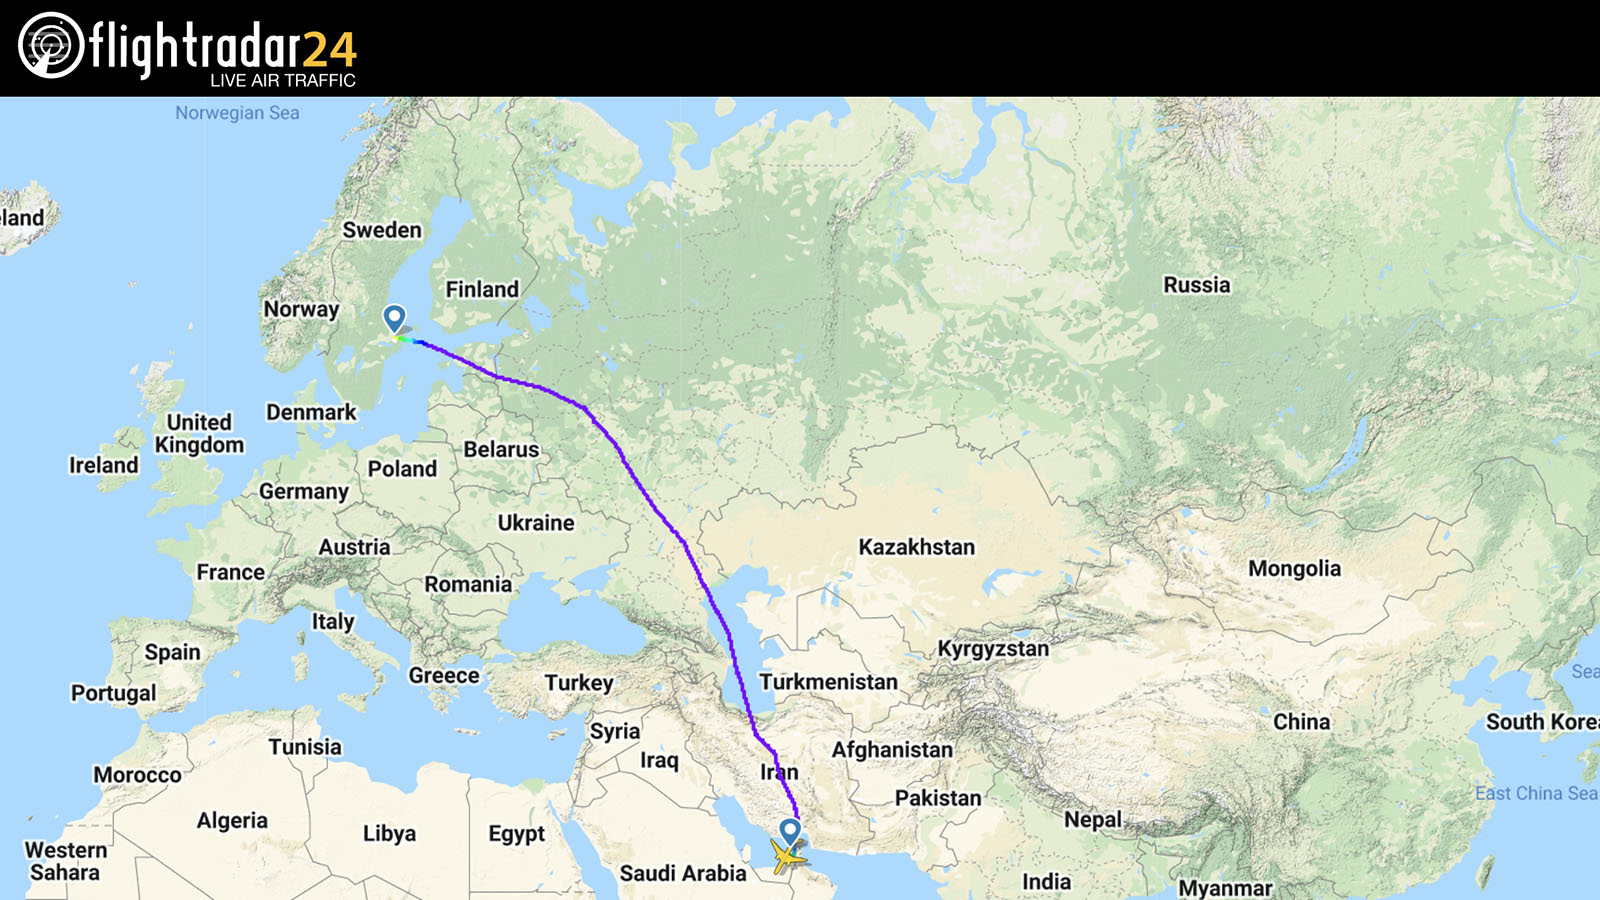 Emirates' previous Dubai-Stockholm flight path